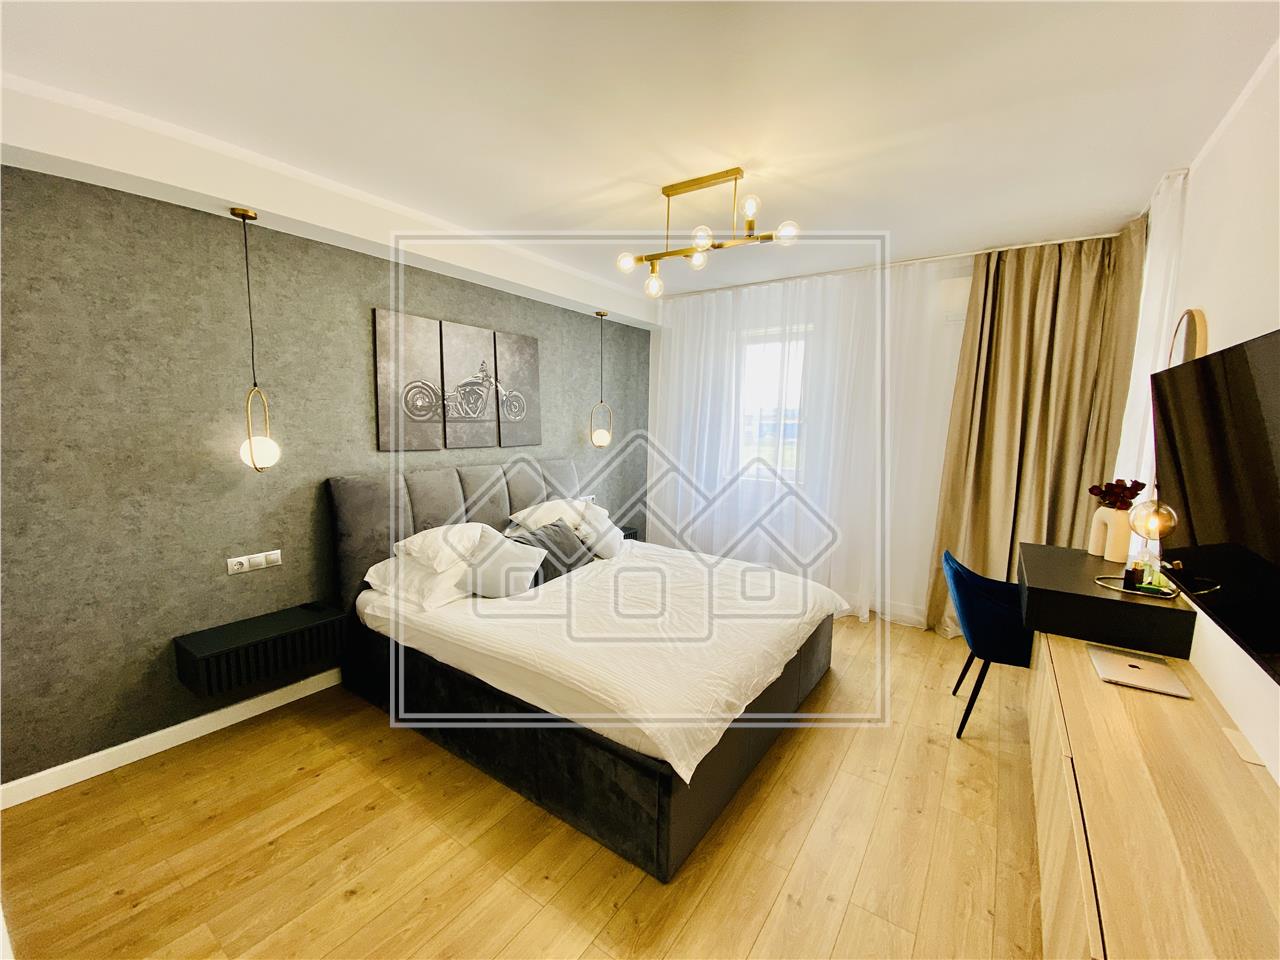 Apartament de vanzare in Sibiu -2 camere, dressing, 2 bai si balcon